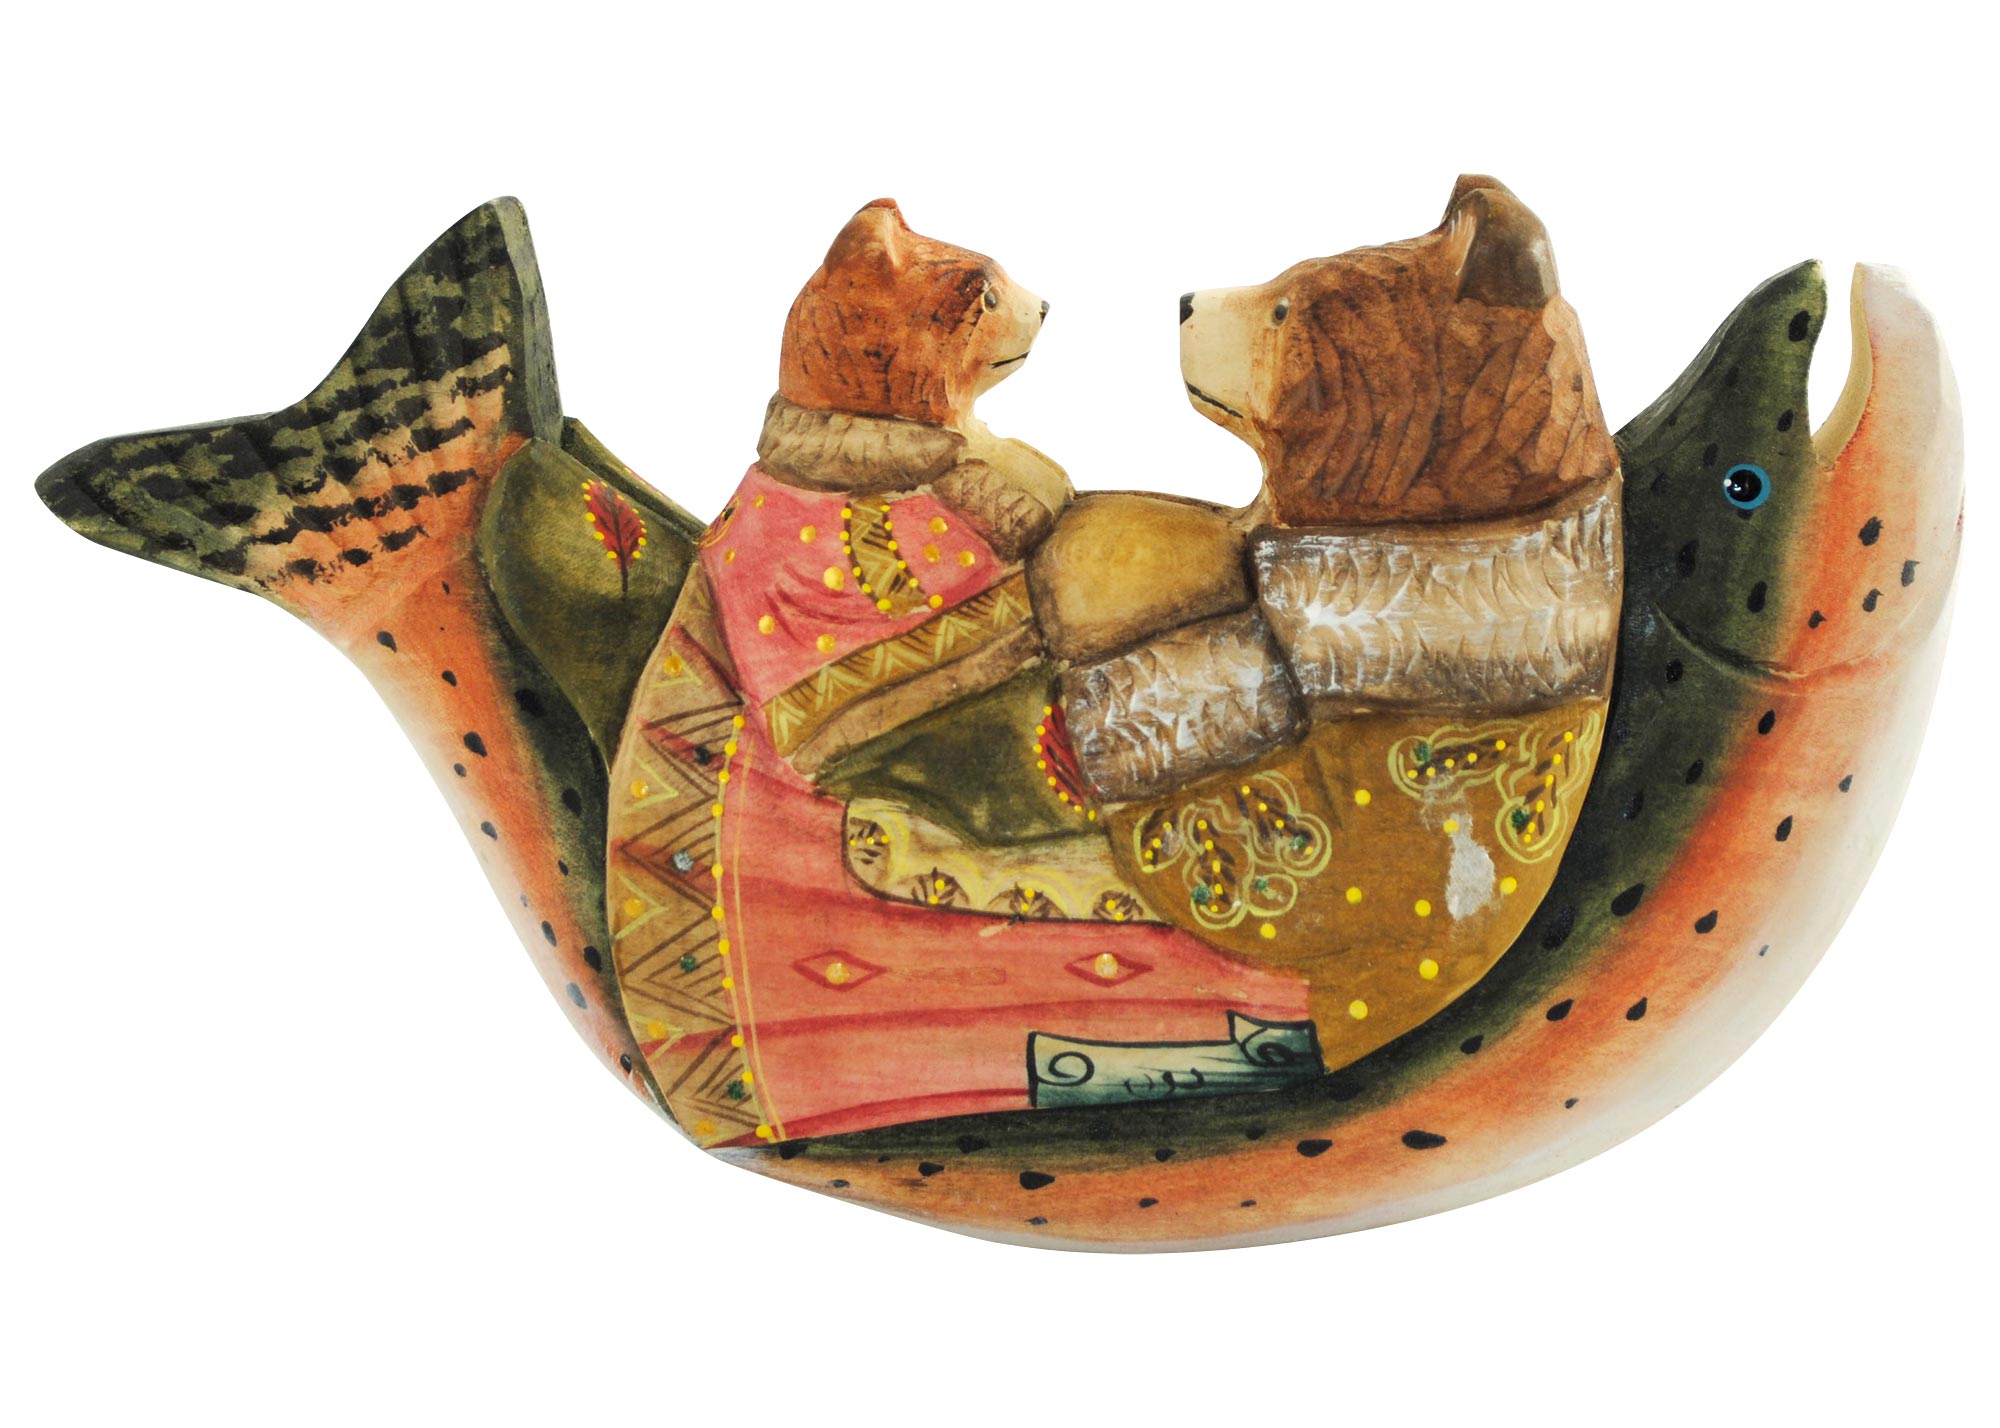 Buy Bedtime Story' Bears Wood Carving 9" at GoldenCockerel.com